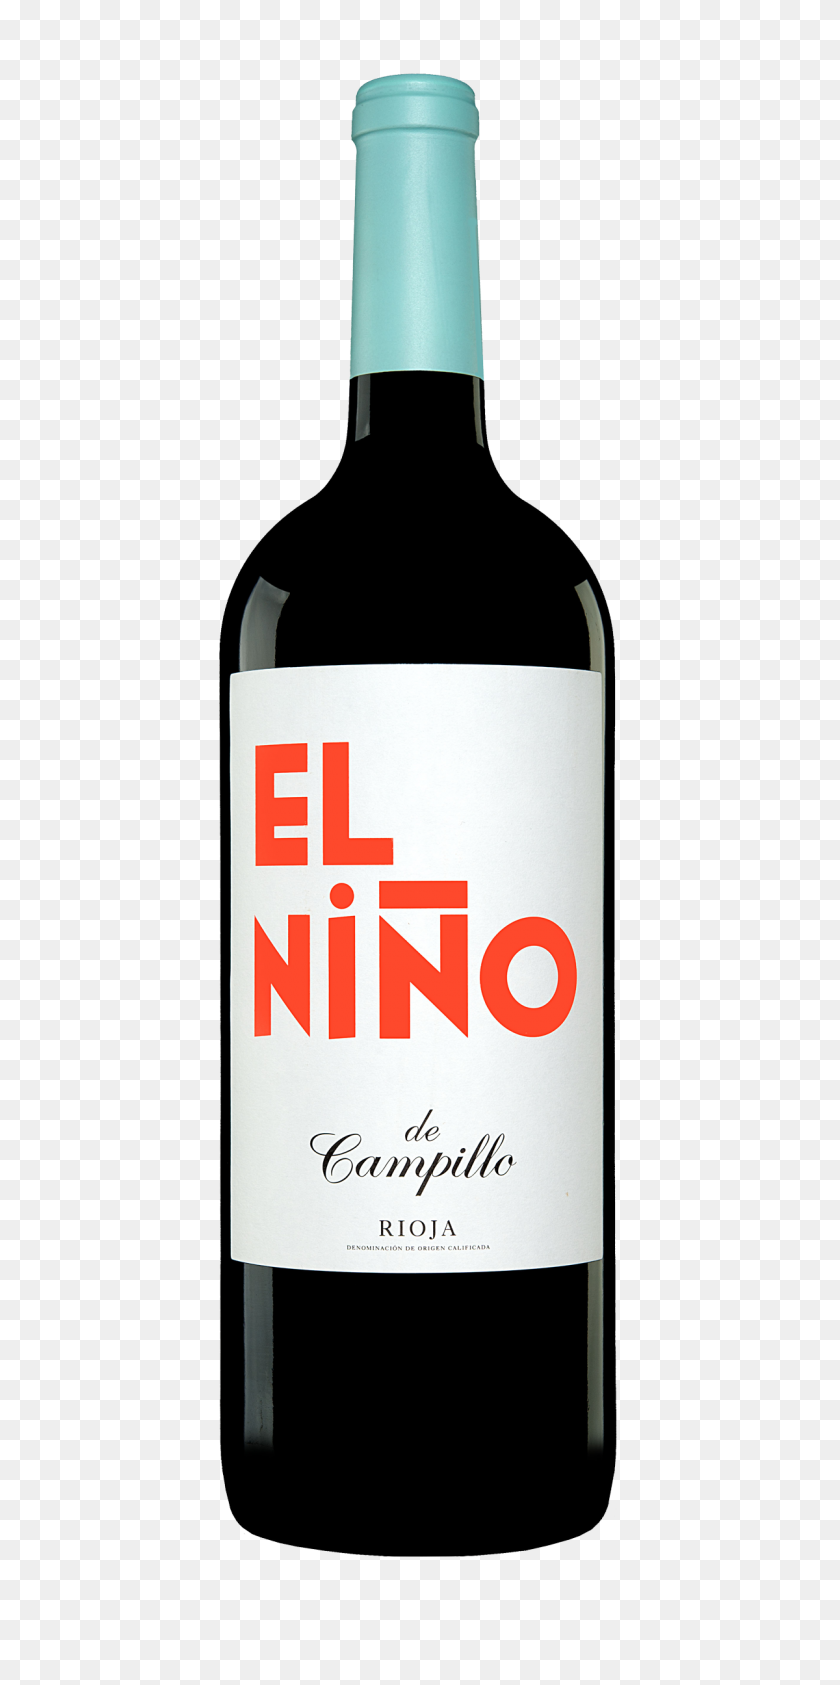 1200x2500 Elninodecampillo Desembarco, Испанское Вино - Бутылка Алкоголя Png